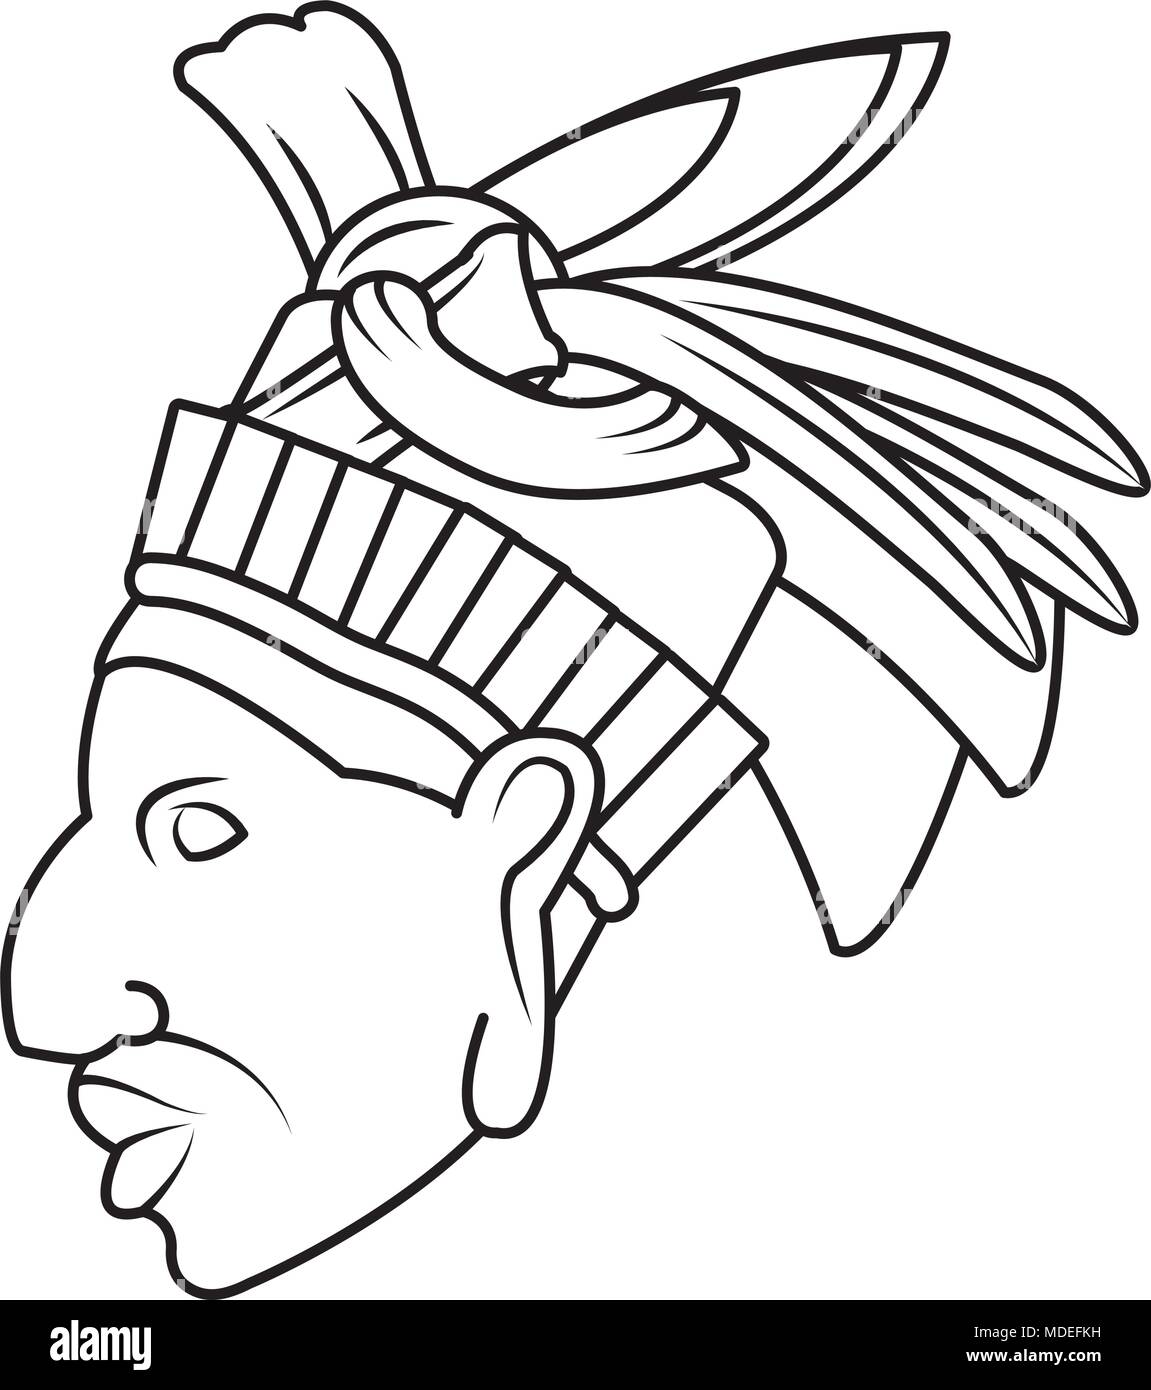 line tradional cacique sculpture native symbol Stock Vector Image